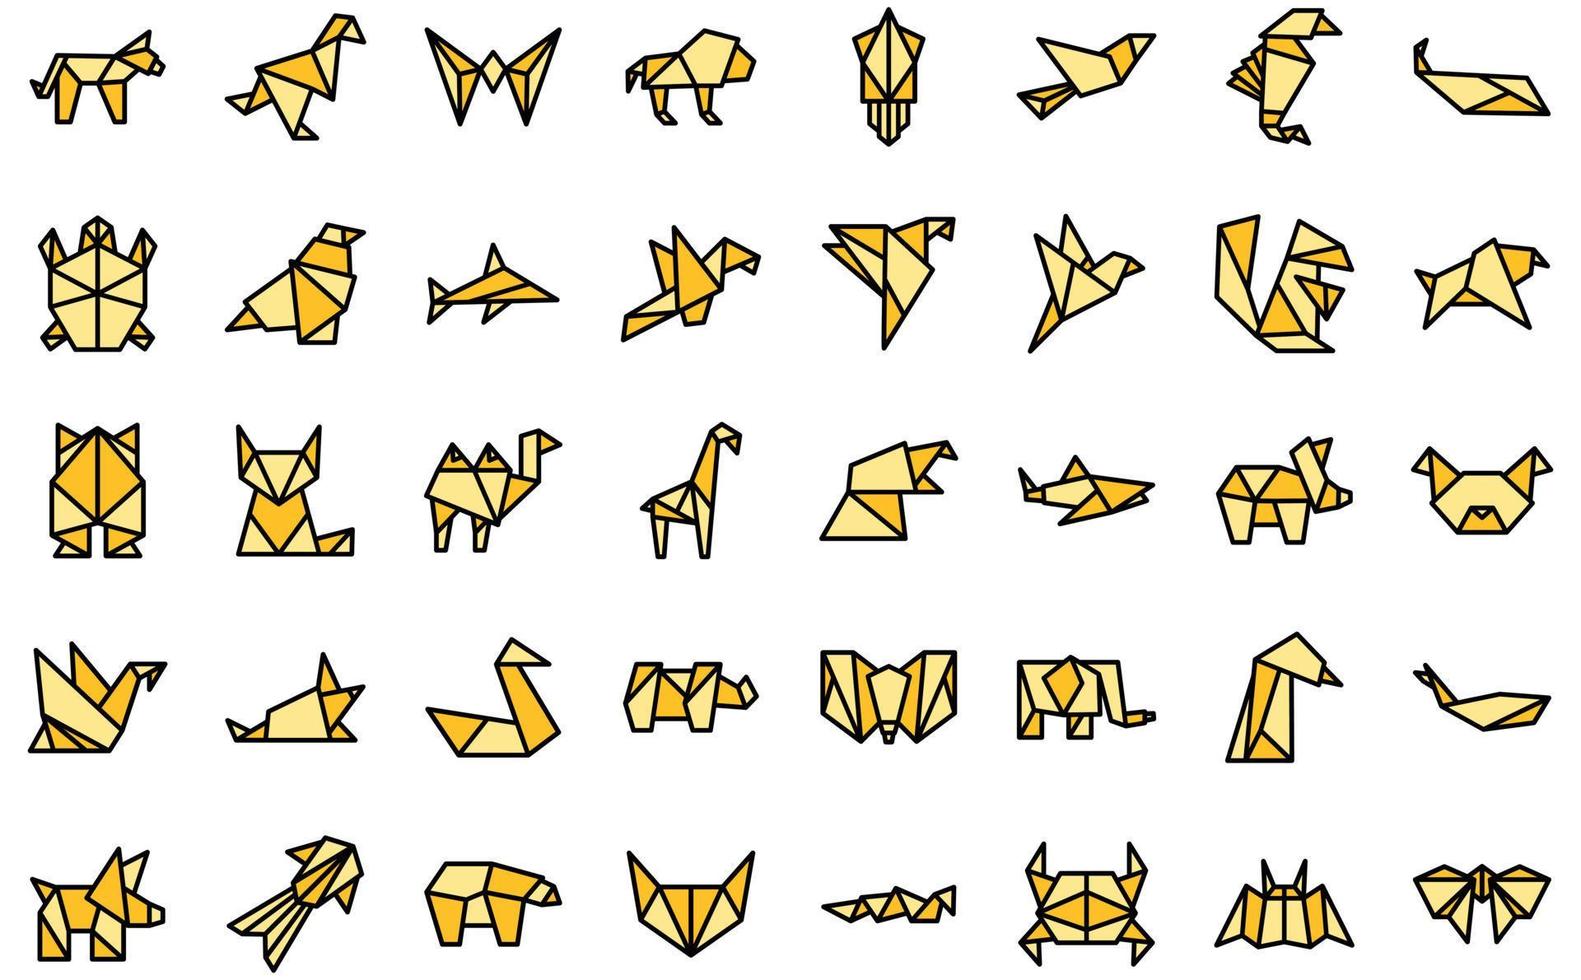 Origami animals icons set vector flat